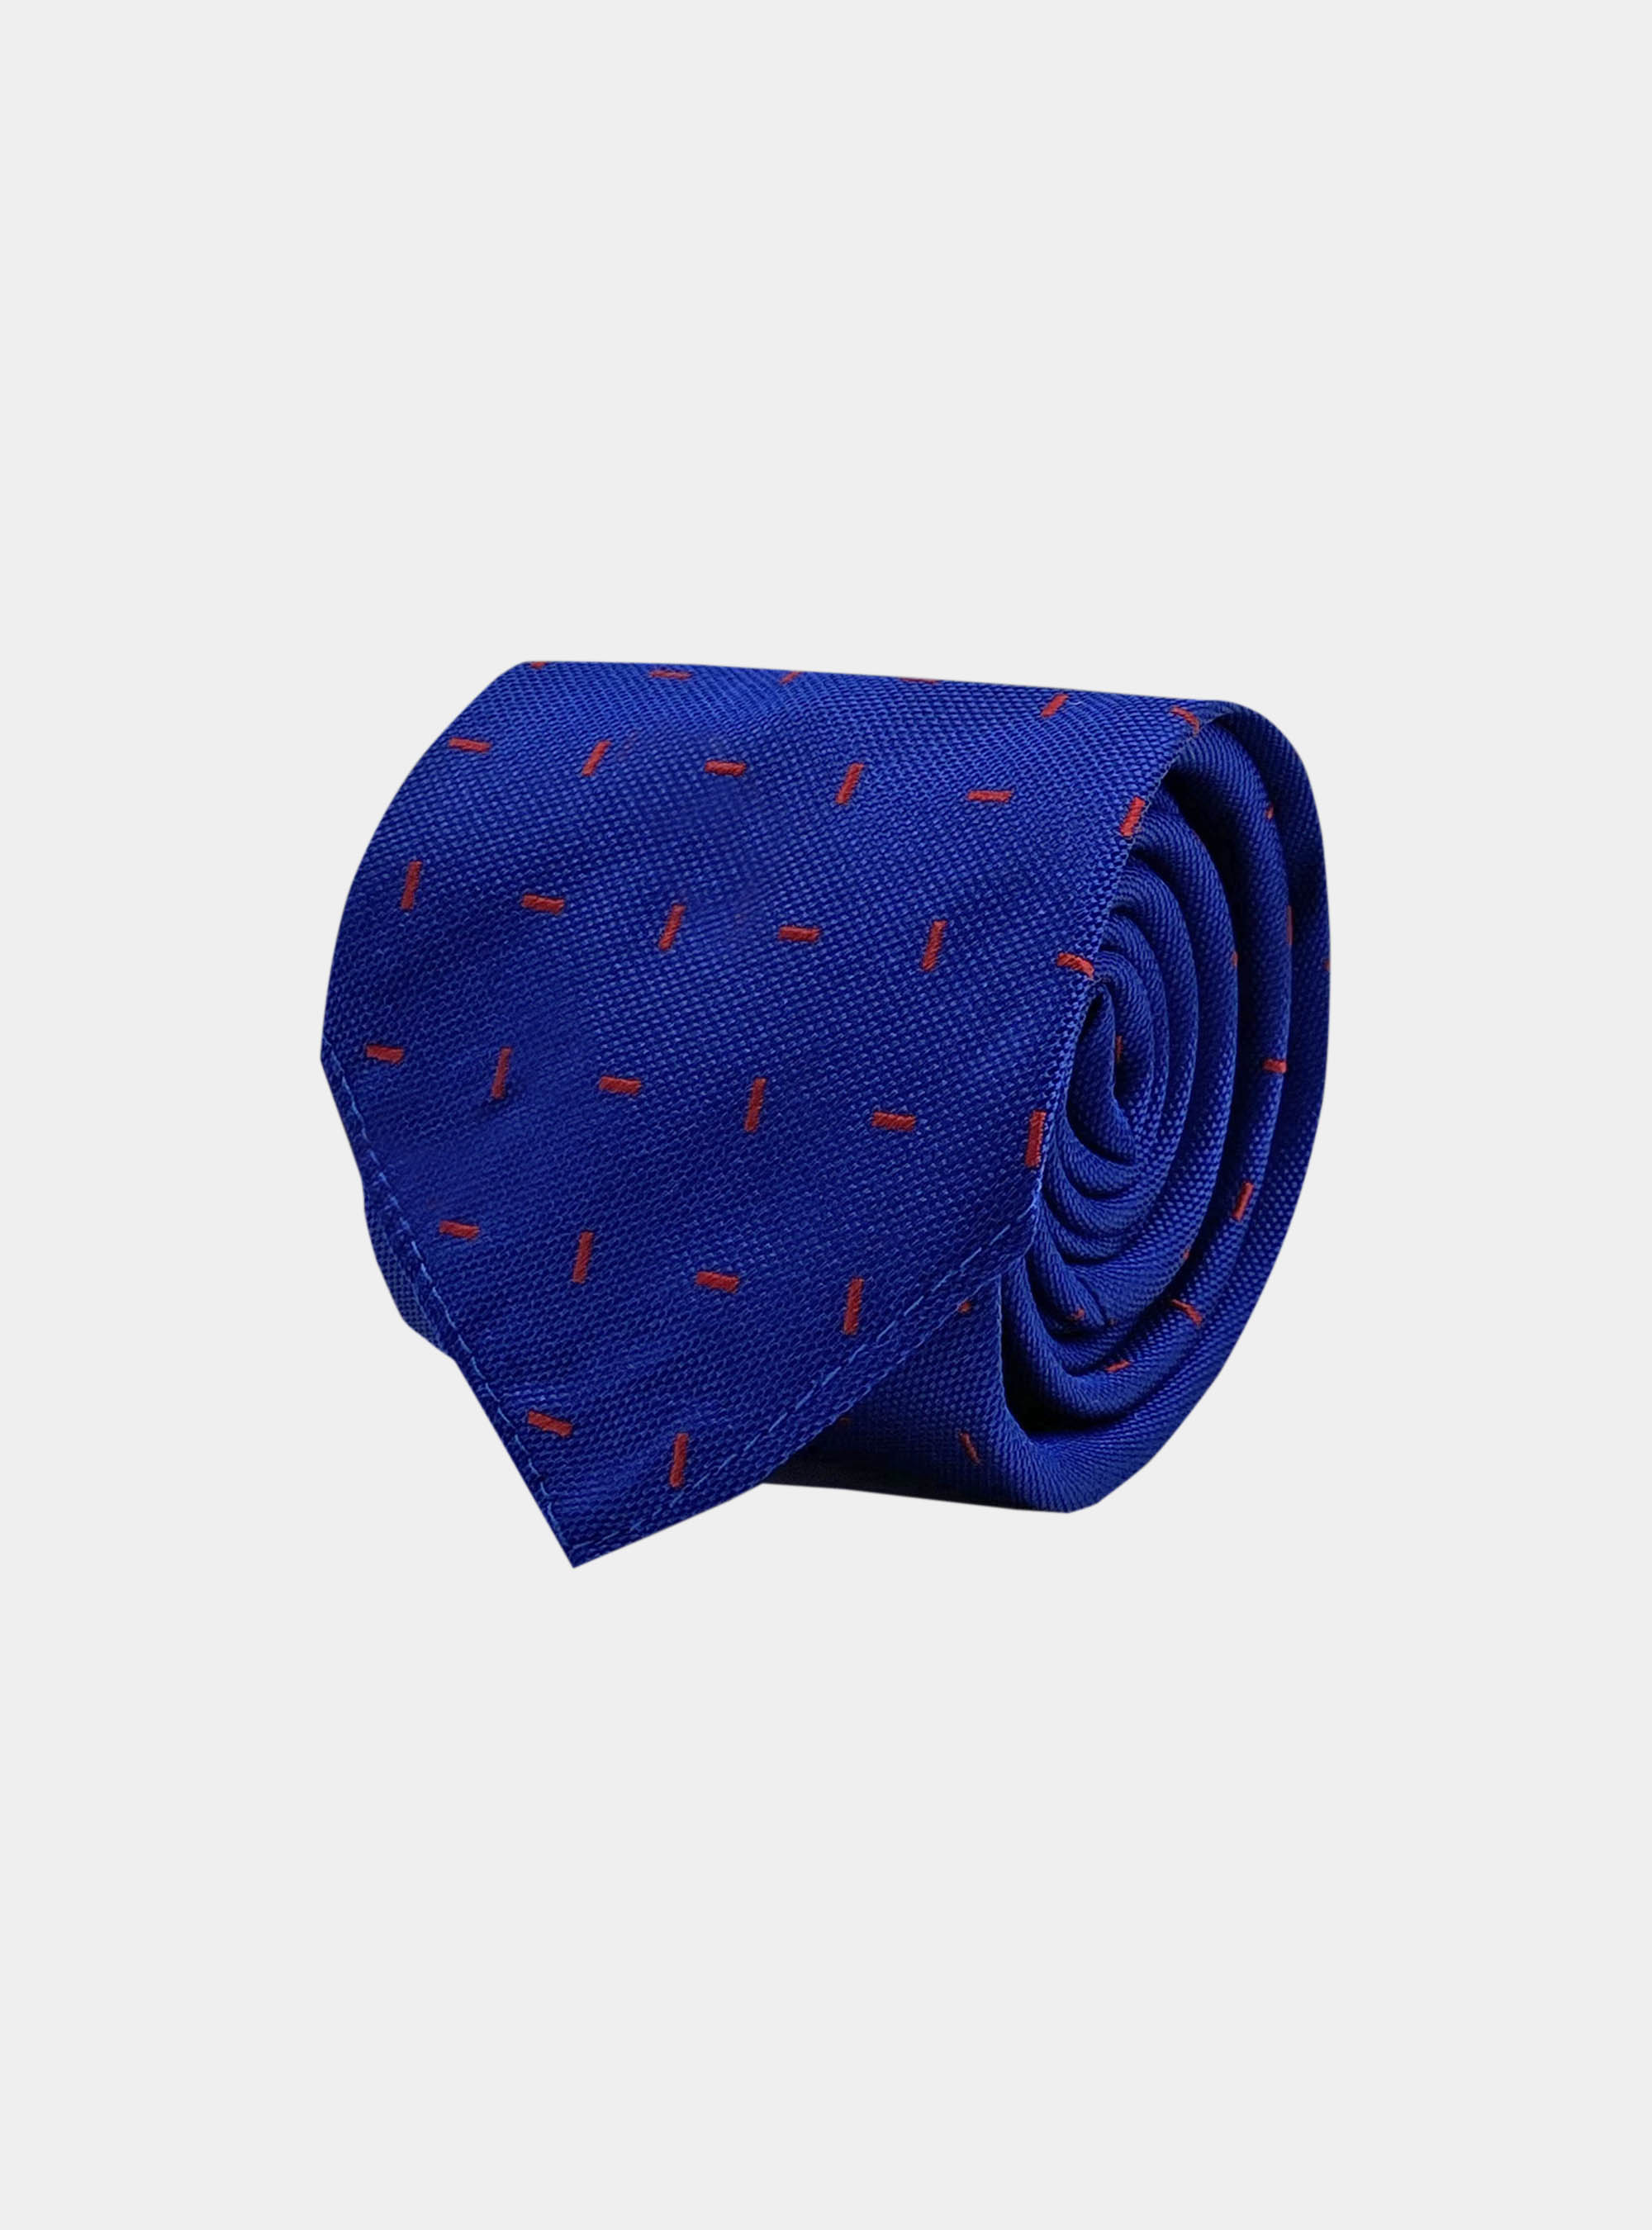 Shlax/&Wing Blu Cravatta scacchi Seta da uomo Attivit/à commerciale Suit per uomo